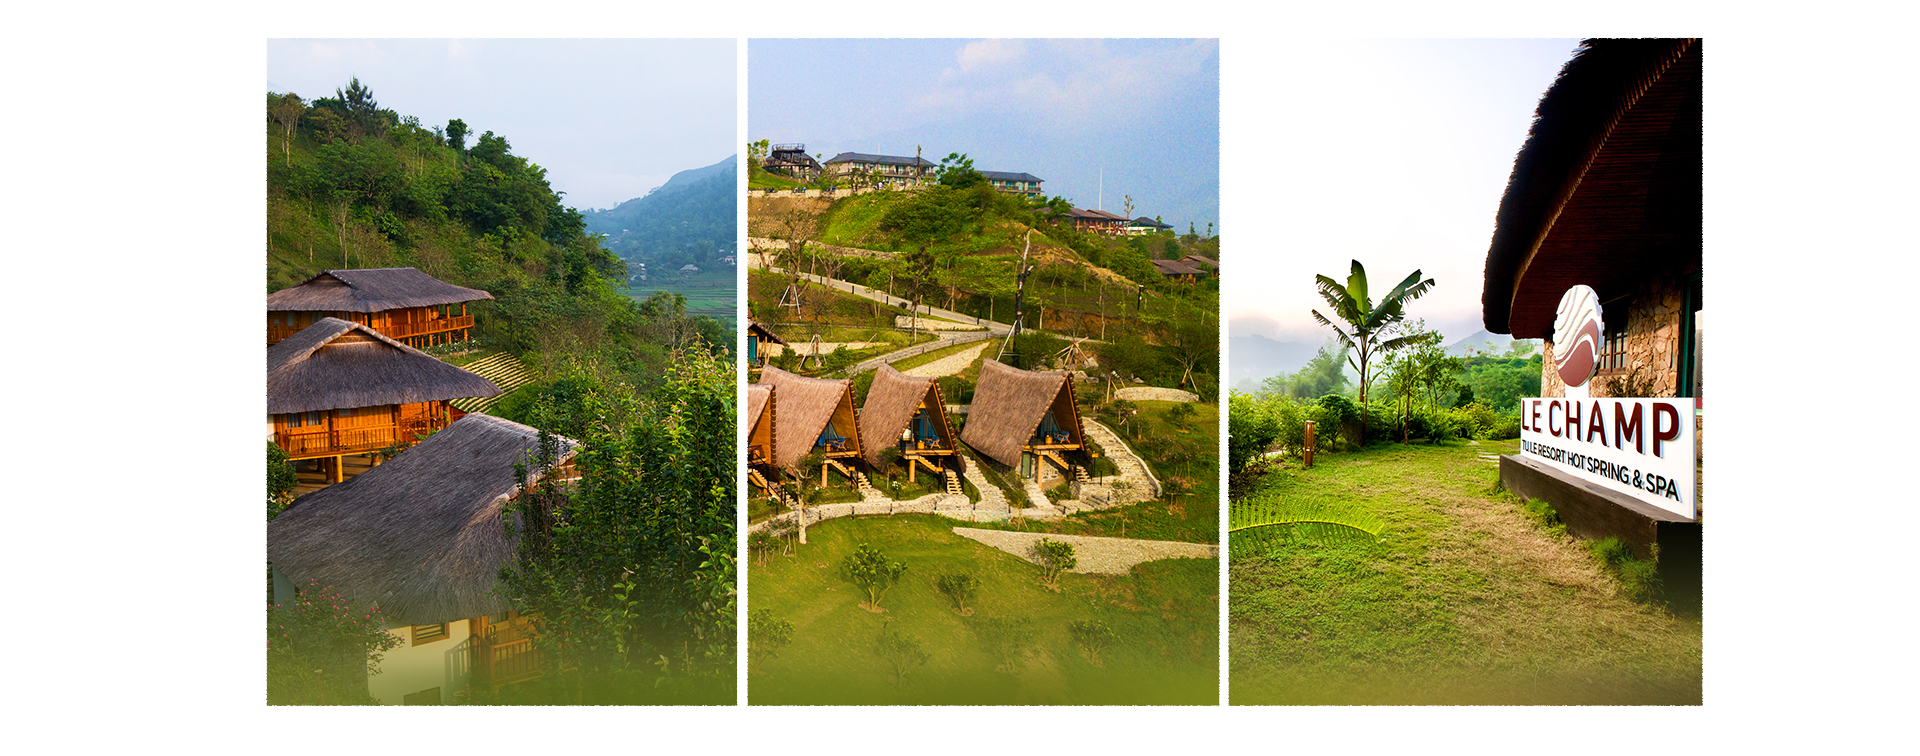 Different views of Le Champ Tu Le Resort Hot Spring & Spa in Van Chan District, Yen Bai Province, Vietnam. Photo: Nam Tran / Tuoi Tre